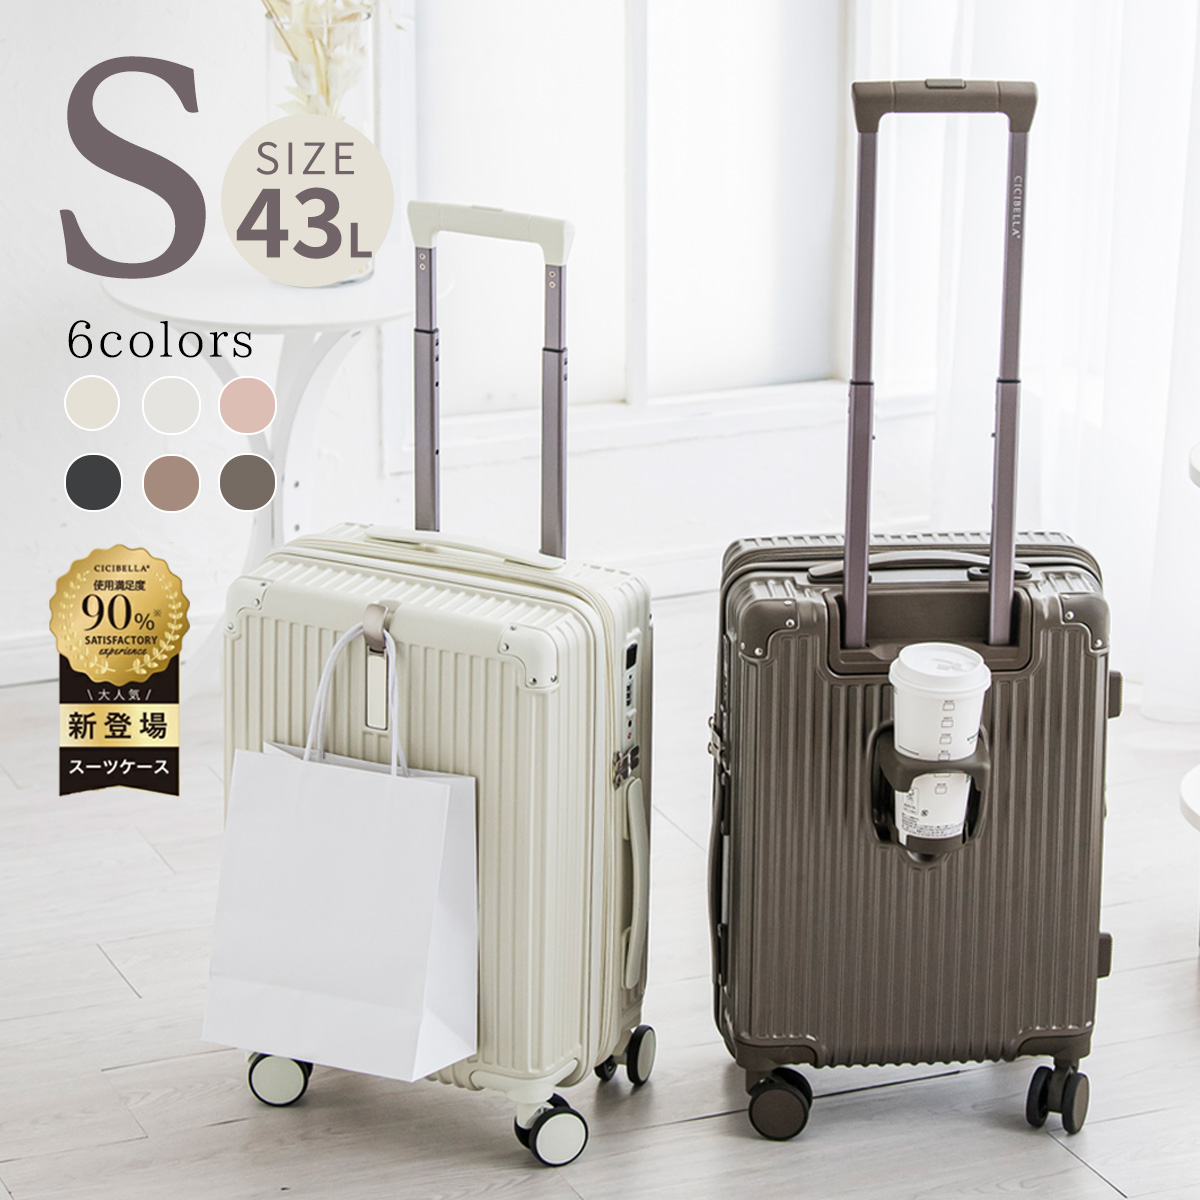 CICIBELLAcicibella スーツケース USBポート付き キャリーケース S 41L 機内持ち込み 1-3日用 泊まる カップホルダー付き 軽量設計 多機能スーツケース